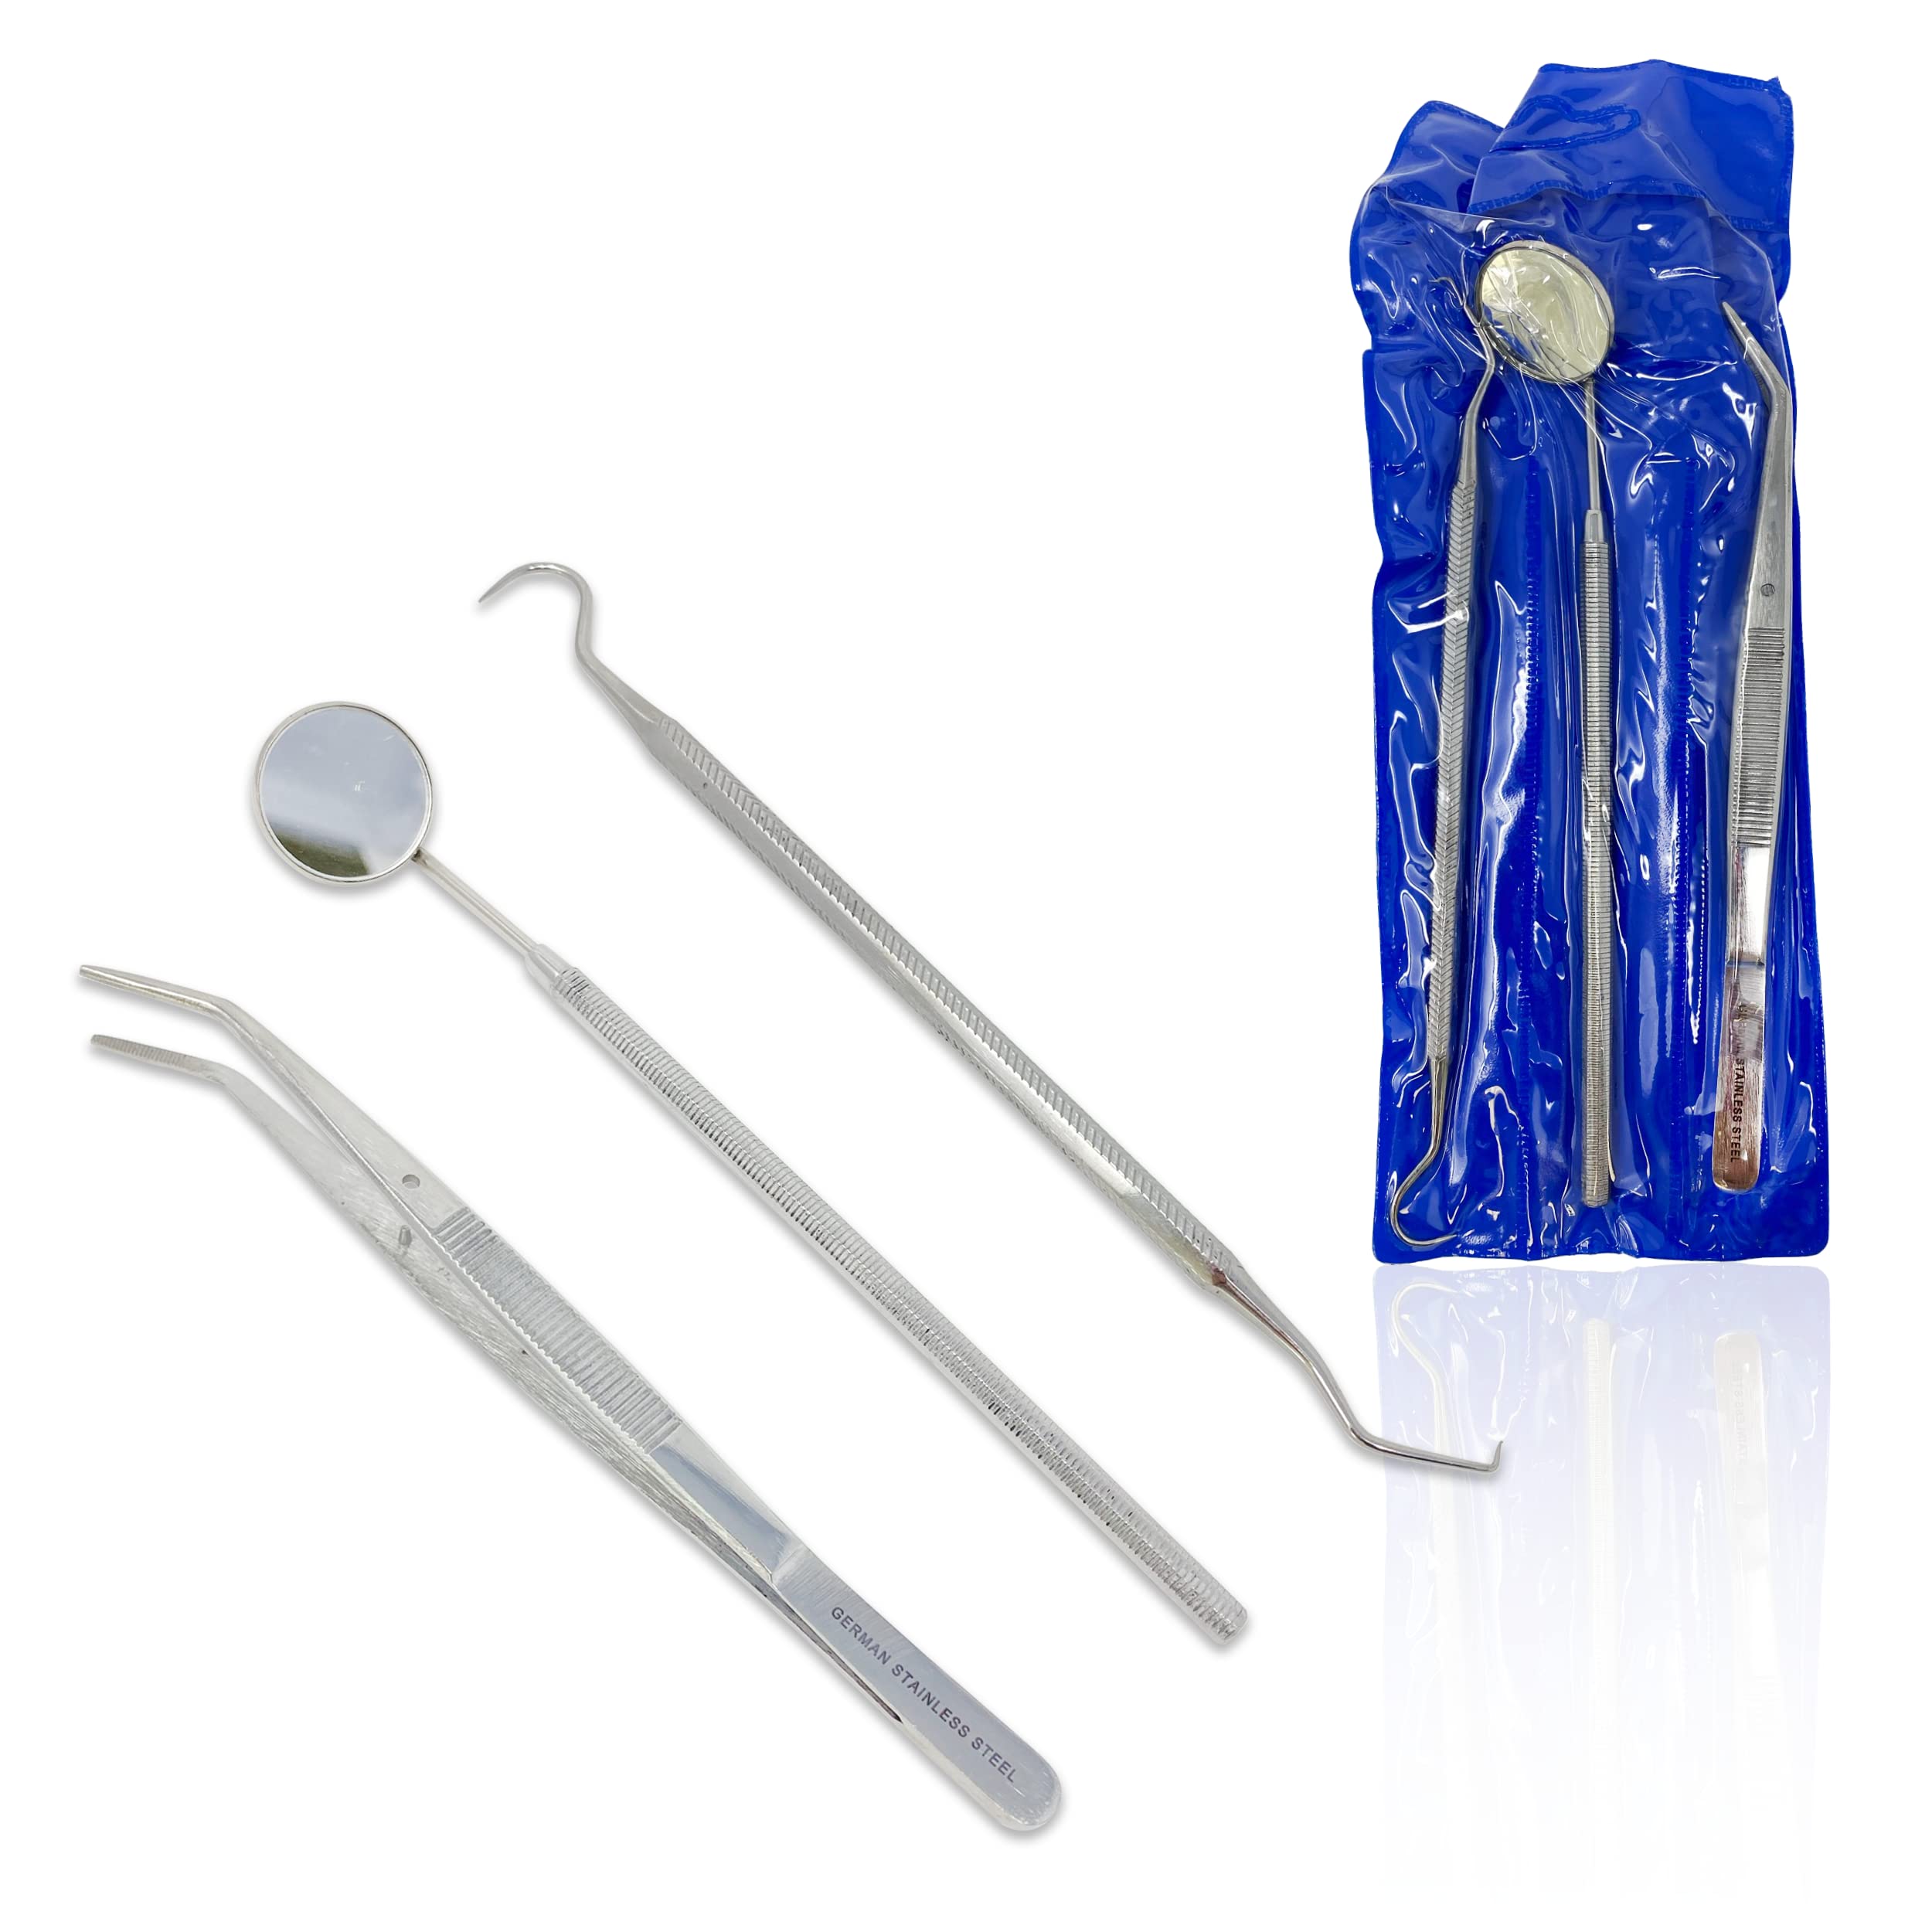 cynamed -Dental Tools Dental Pick Oral care Kit, Stainless Steel Dental Hygiene Kit Set, Tooth Scraper Tartar Dental Scaler Twee